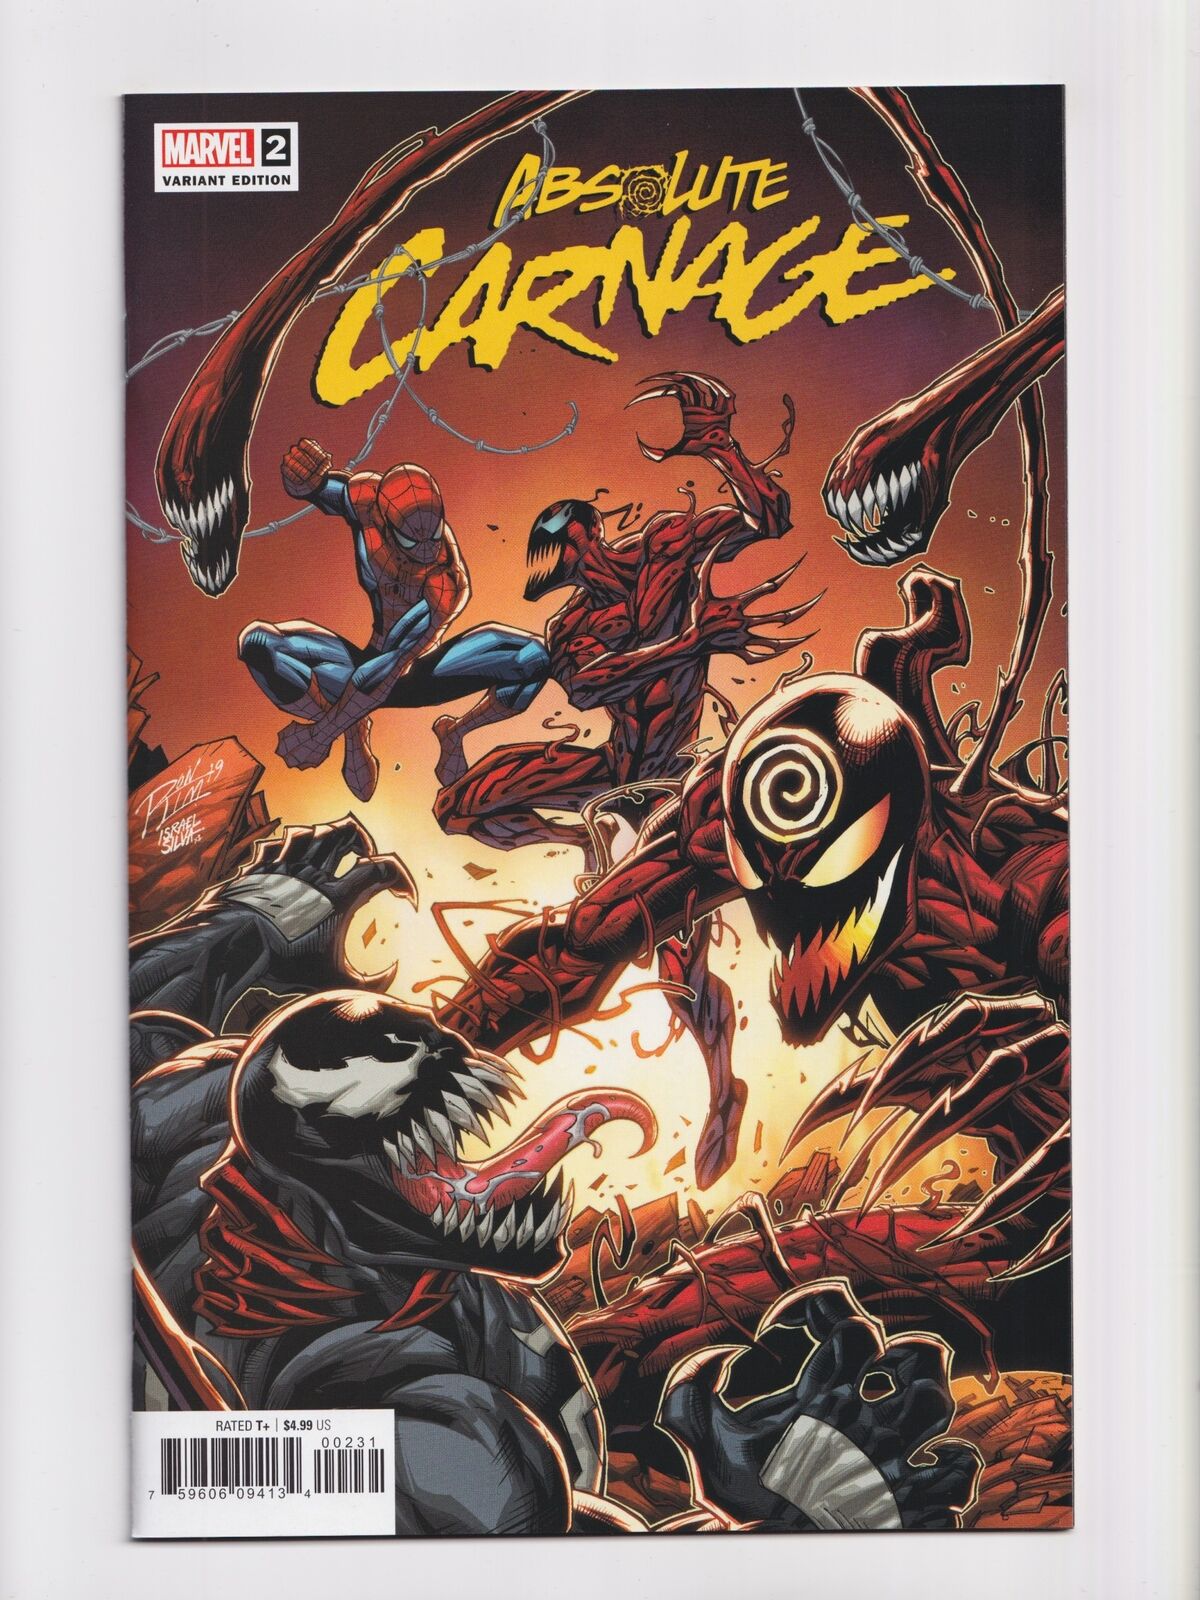 Absolute Carnage #2 Marvel 2019 Spider-Man Venom Variant Cover Comic Book NM+